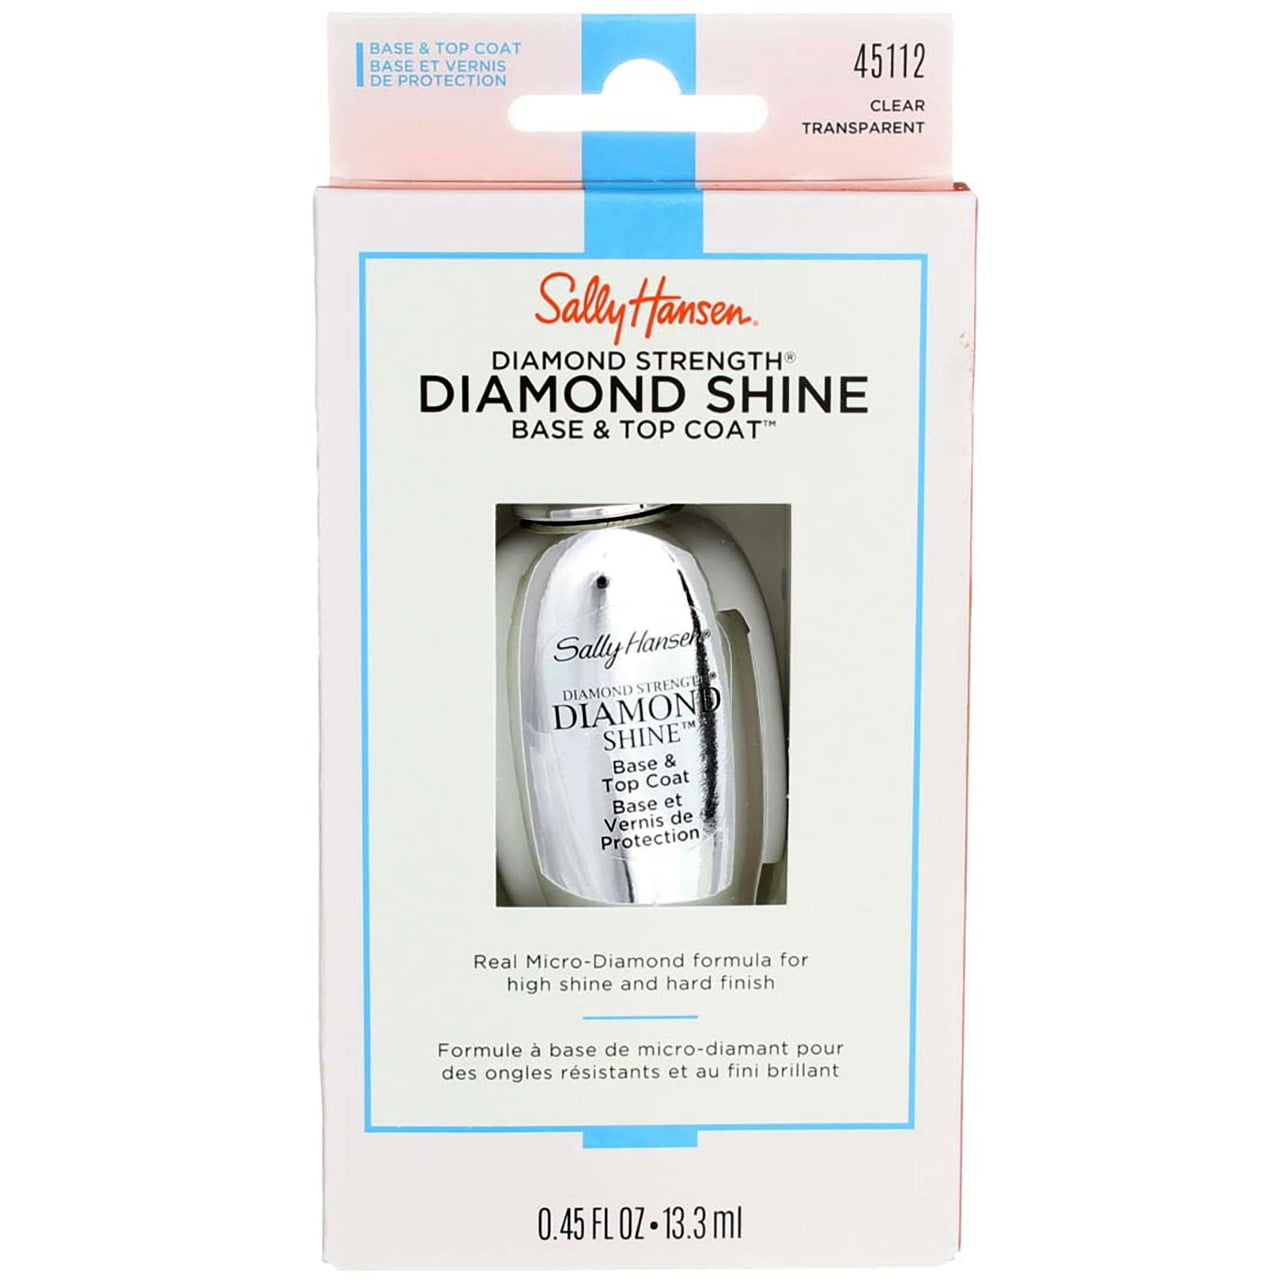 Tanke Beroligende middel Vi ses Sally Hansen Diamond Strength Diamond Shine Nail Base & Top Coat, Clear  Transparent 45112, 0.45 fl oz - Walmart.com